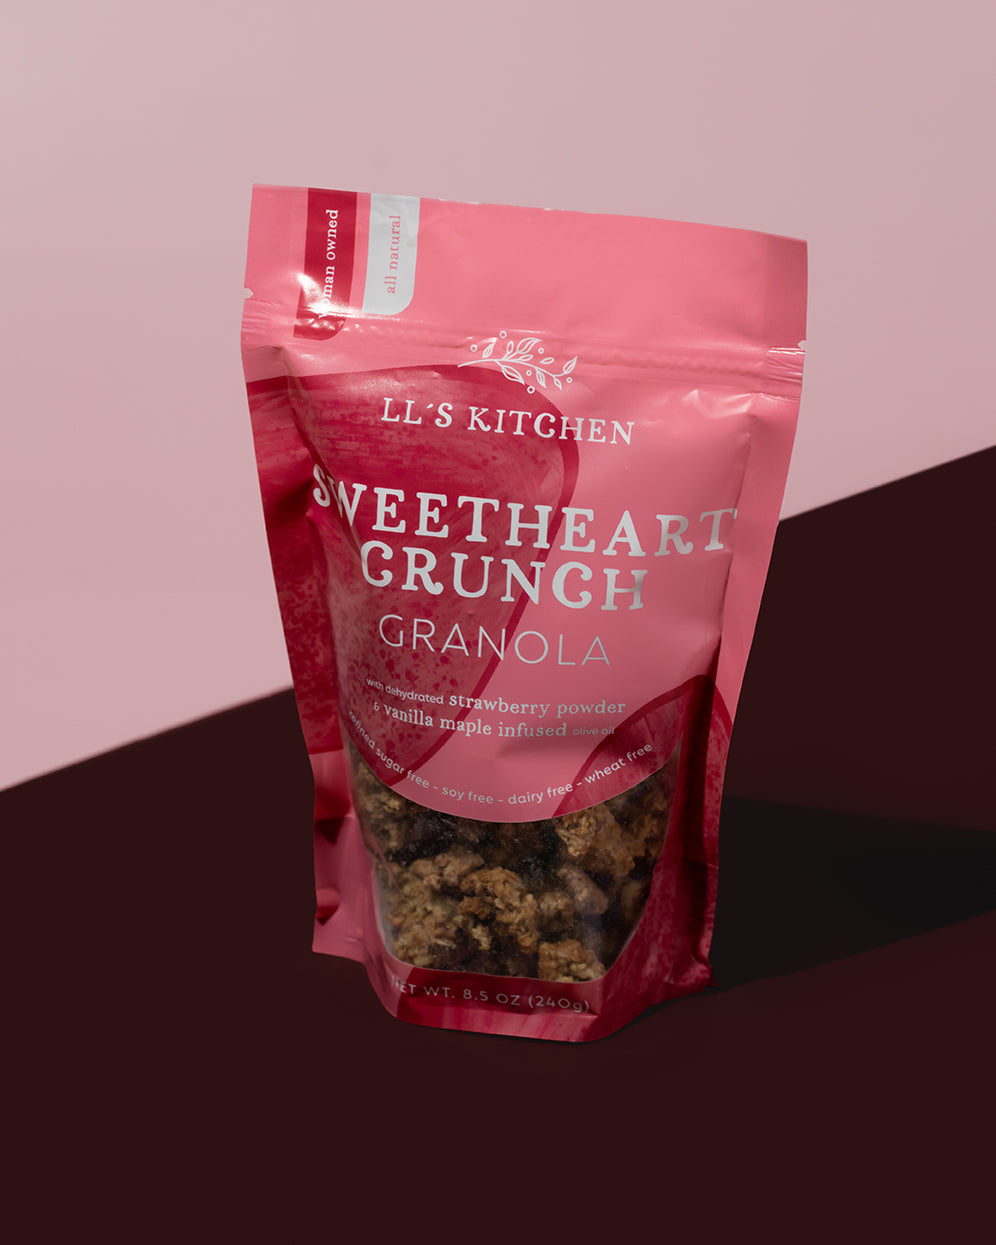 Sweetheart Crunch Granola